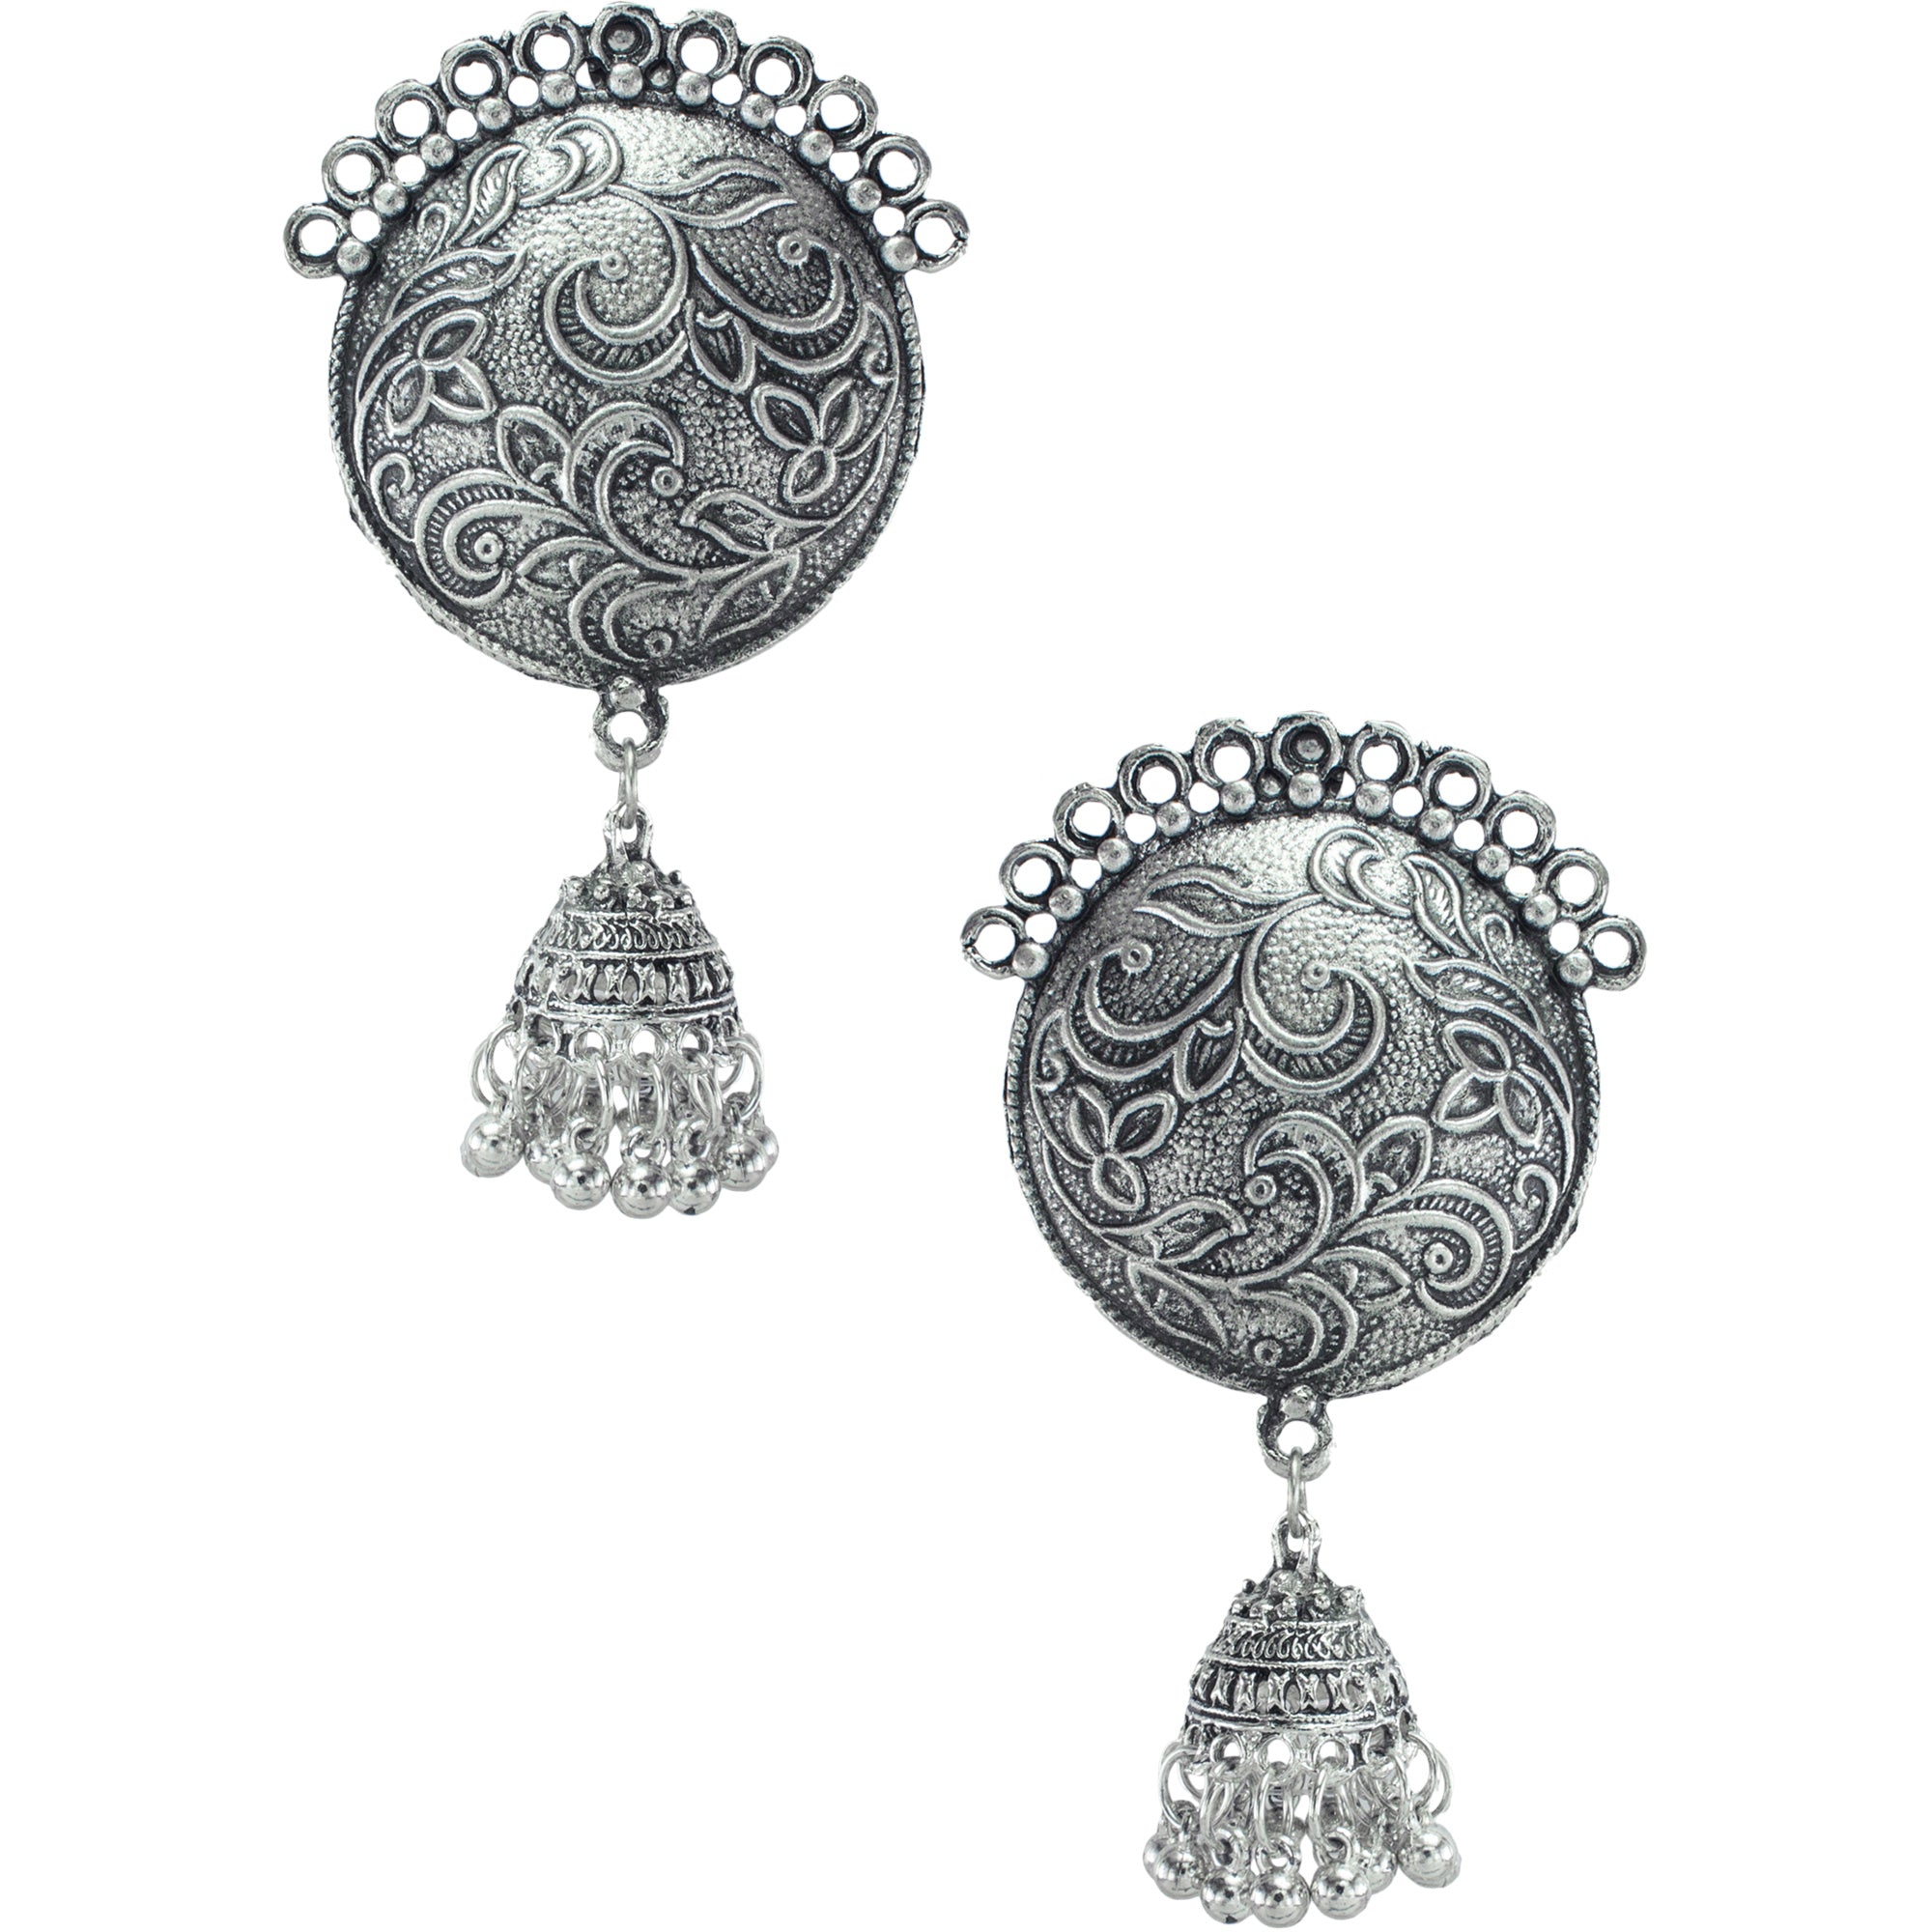 Abhinn Stylish Silver Oxidized Circular Stud With Jhumki Earrings for Women